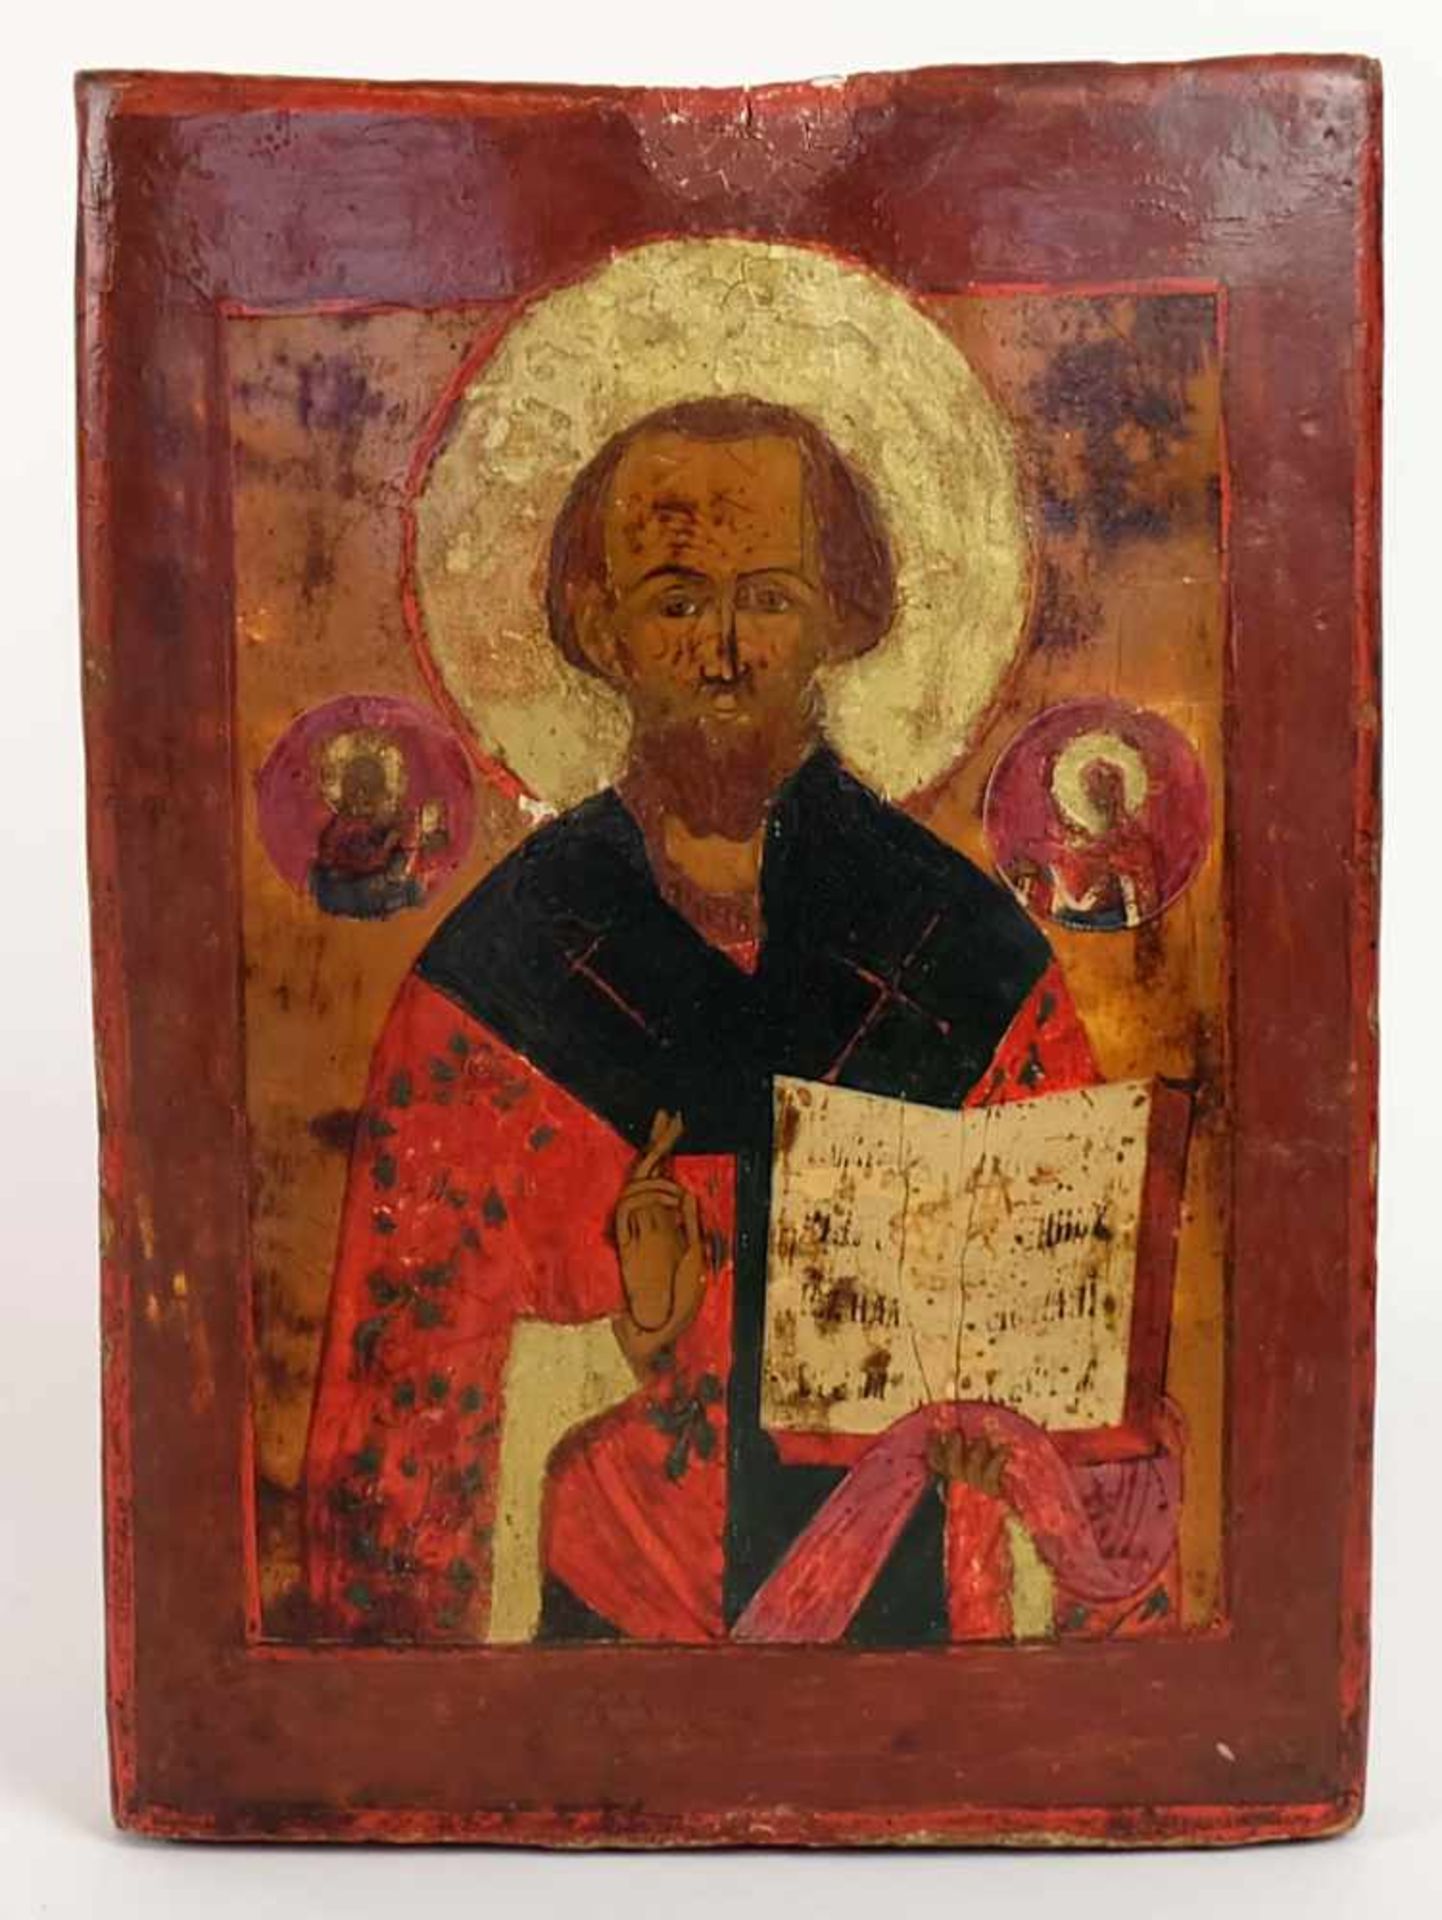 IKONE, Russland, 18. Jh oder früher (?), Heiliger Nikolaus, 28 x 20,5 cm, restauriert